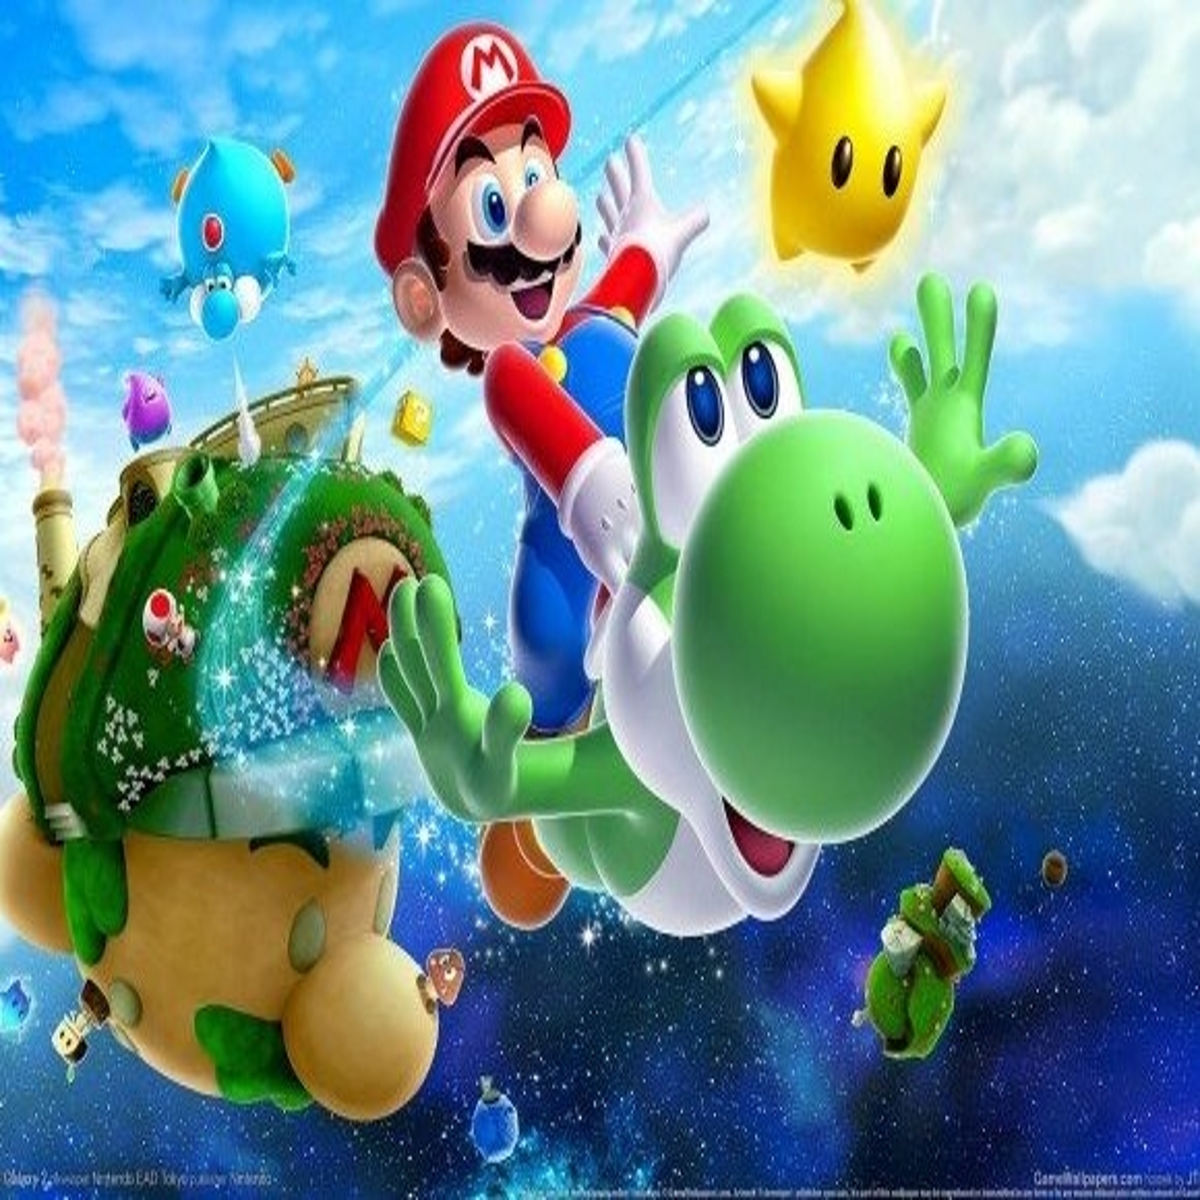 Jogos do Mario  Super mario art, Super mario galaxy, Super mario bros